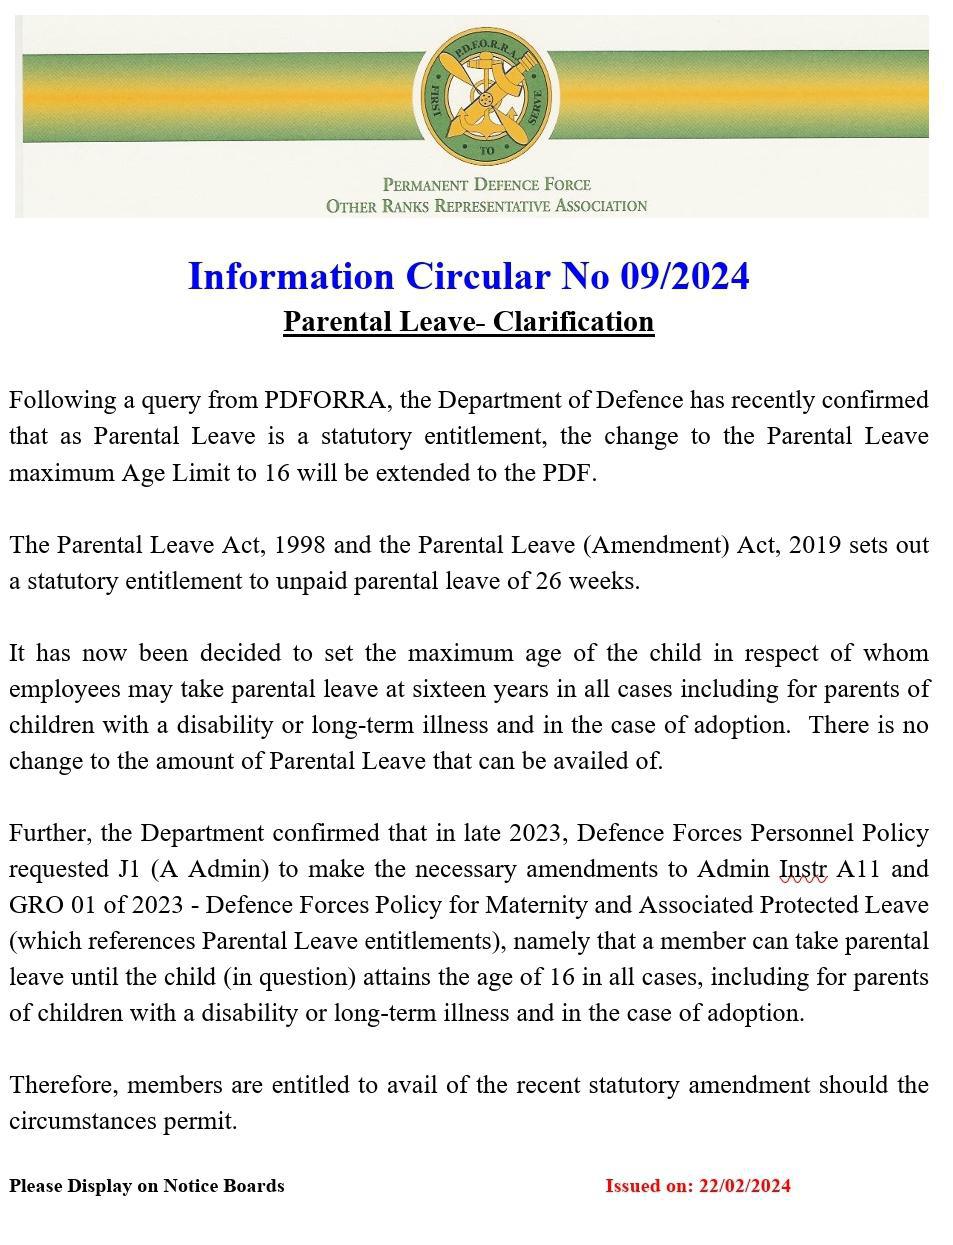 Information Circular No 09 of 24 - Parental Leave Clarification